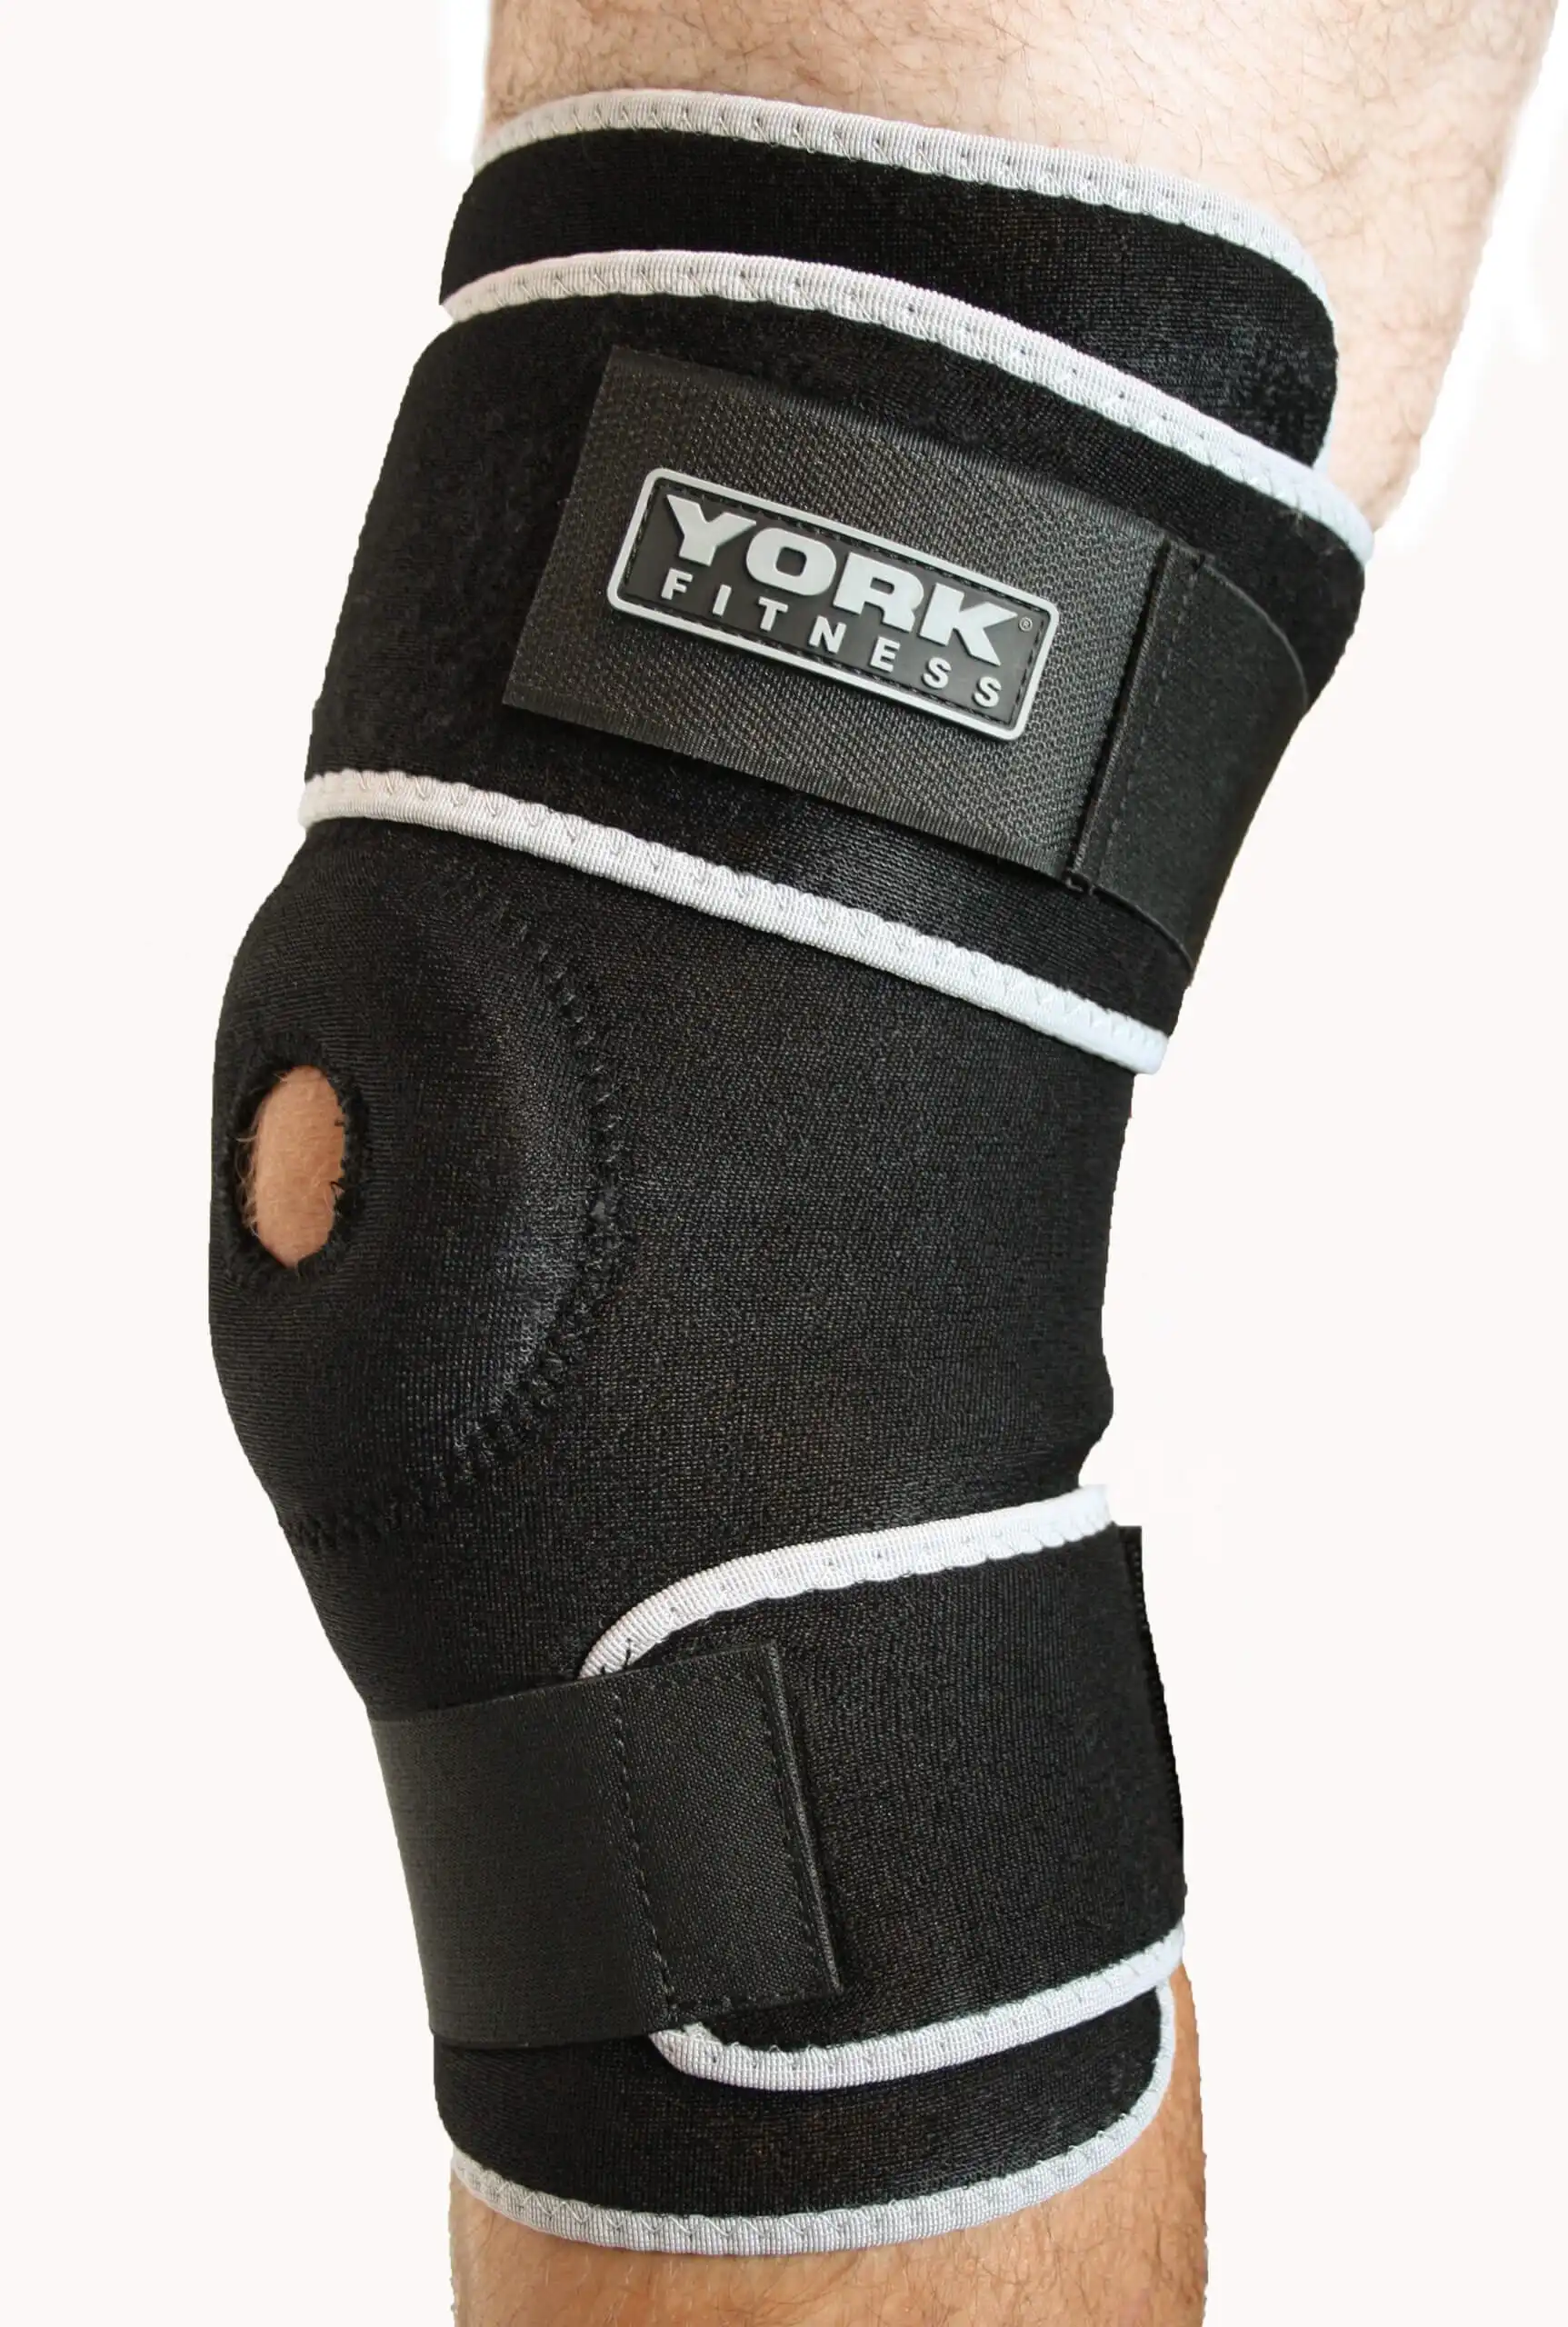 York Fitness Adjustable Knee Support (Pair)